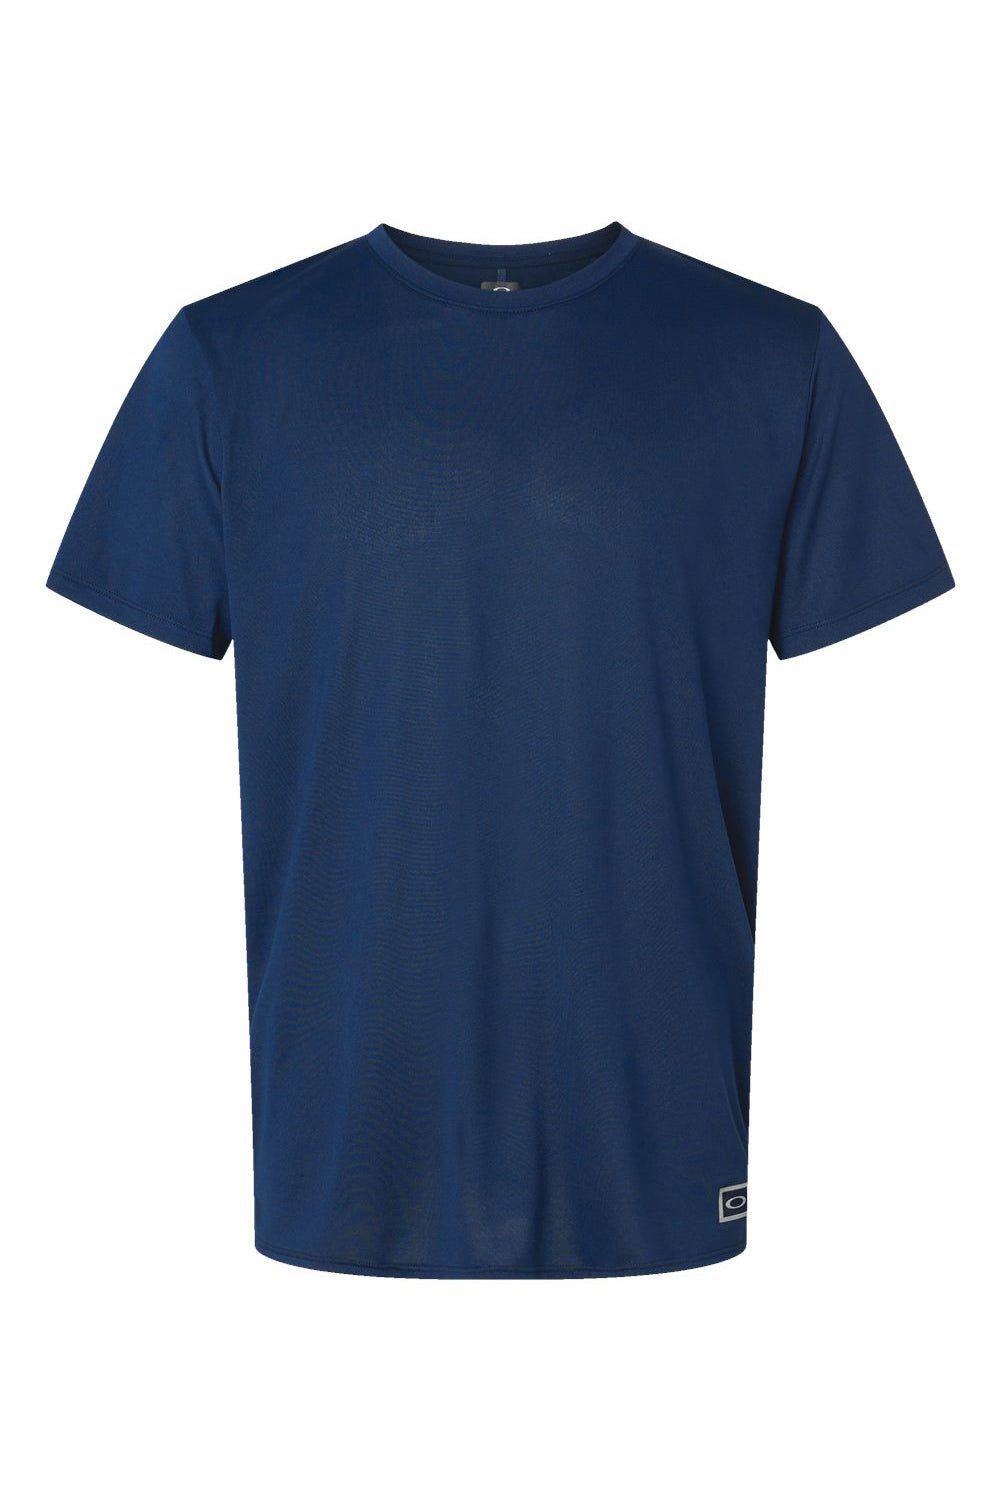 Oakley FOA402991 Mens Team Issue Hydrolix Short Sleeve Crewneck T-Shirt Team Navy Blue Flat Front